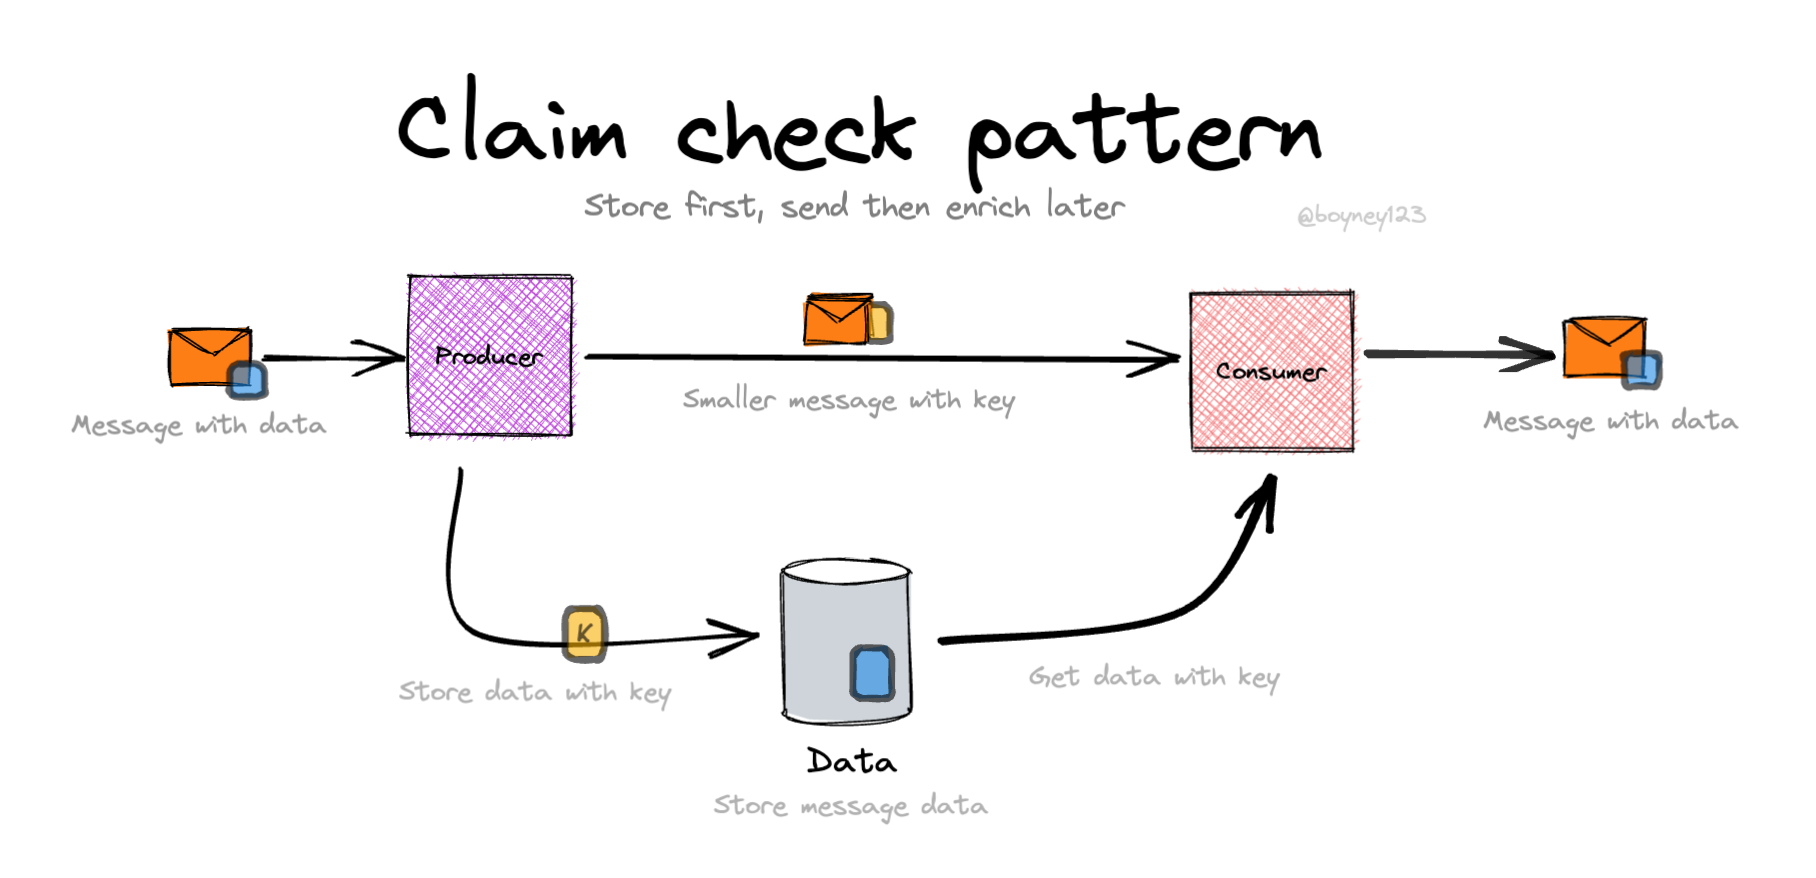 Claim check pattern